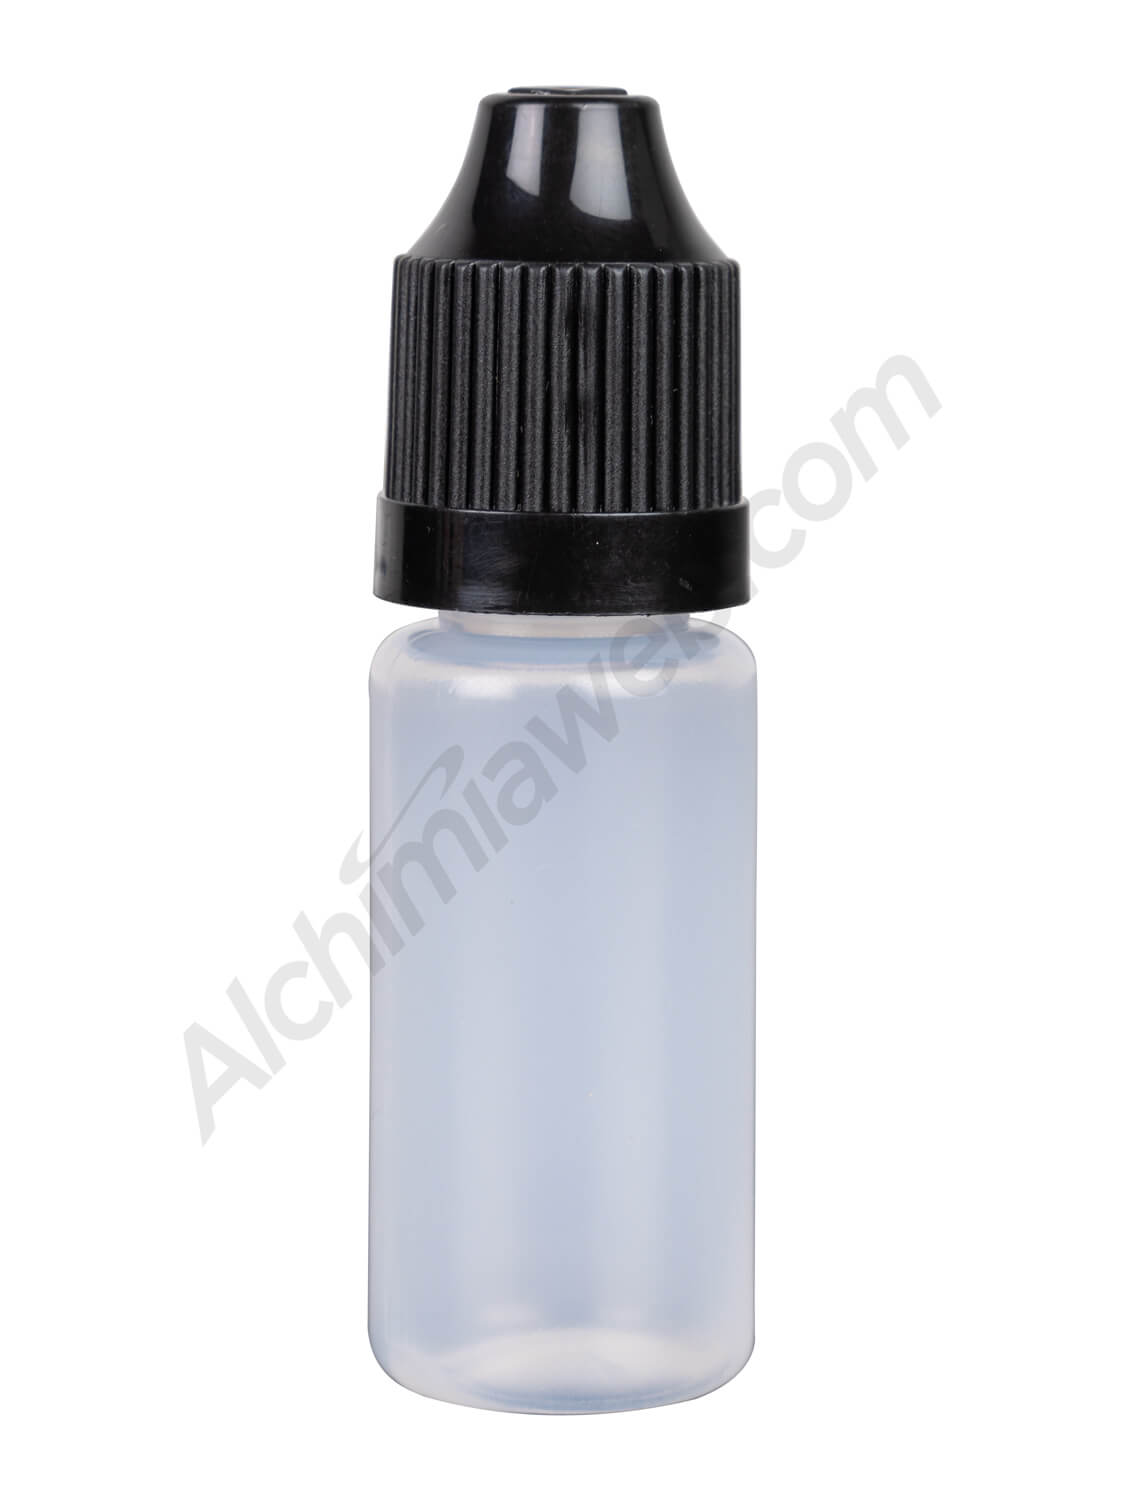 Sale of Wax Liquidizer Stash Bottle